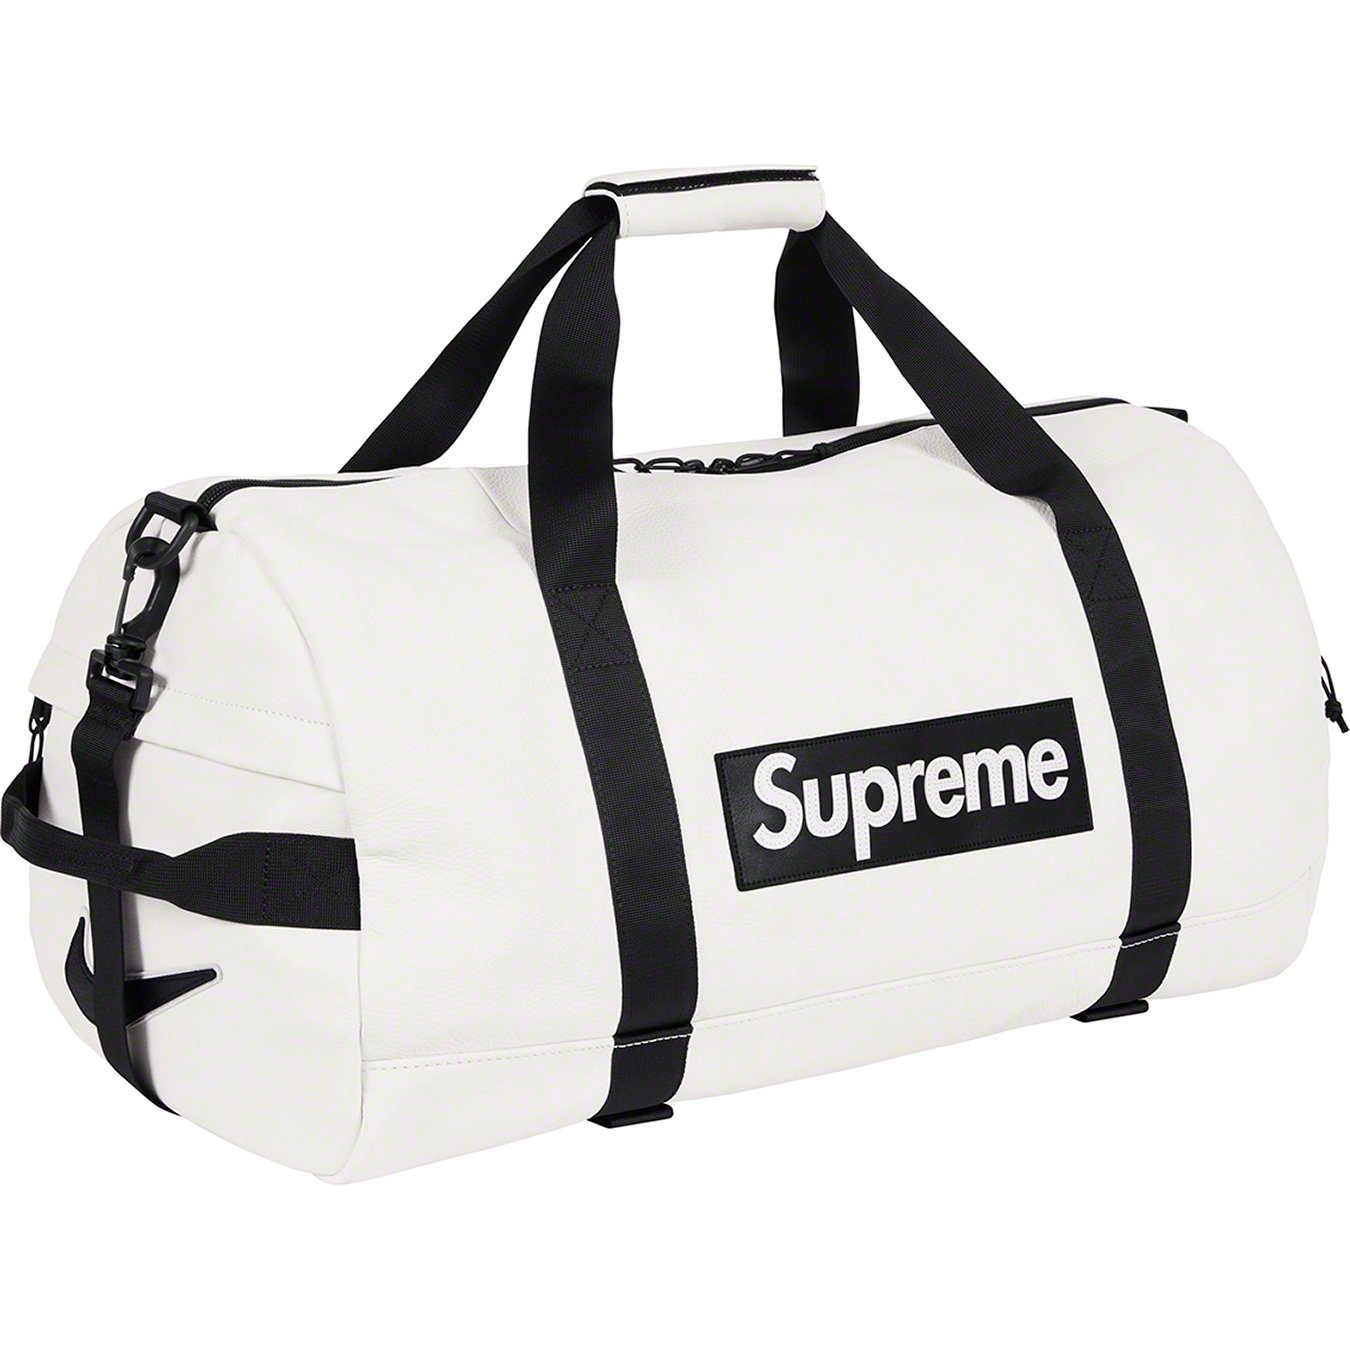 Supreme®/Nike® Leather Duffle Bag - Supreme Community